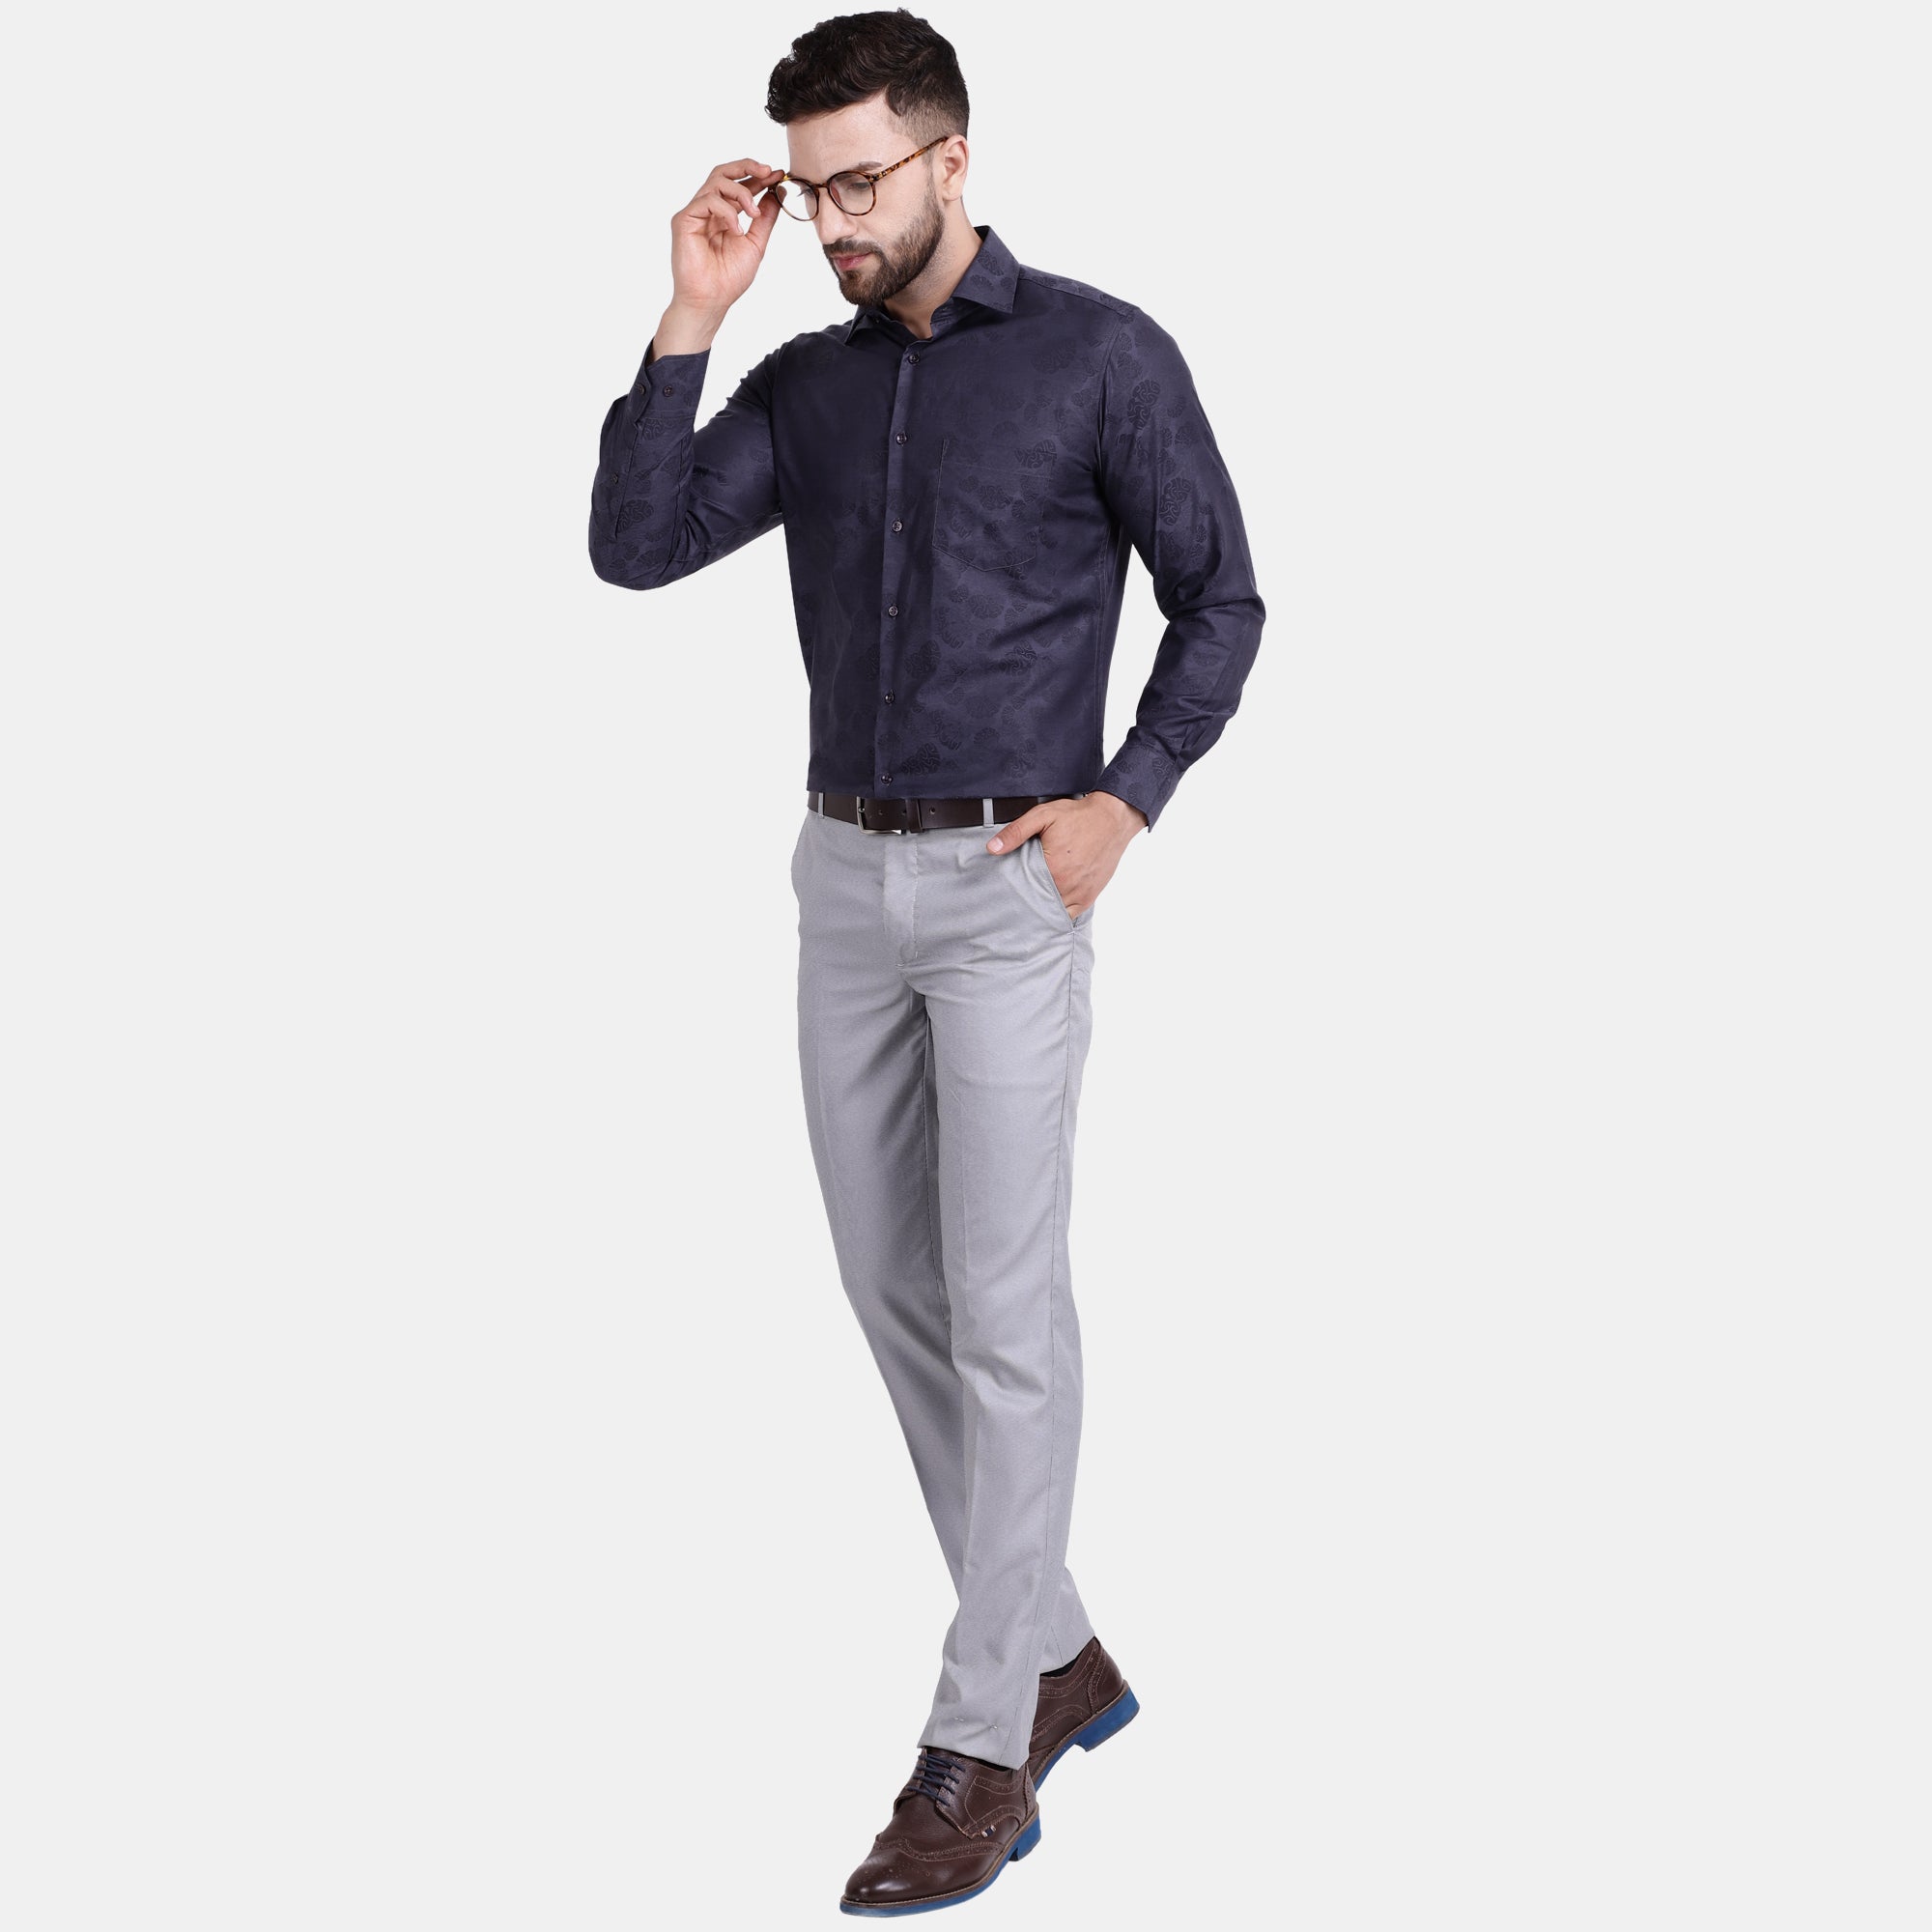 Men's Luthai Supima Mercerised Cotton Subtle Textured Jacquard Design Regular Fit Shirt